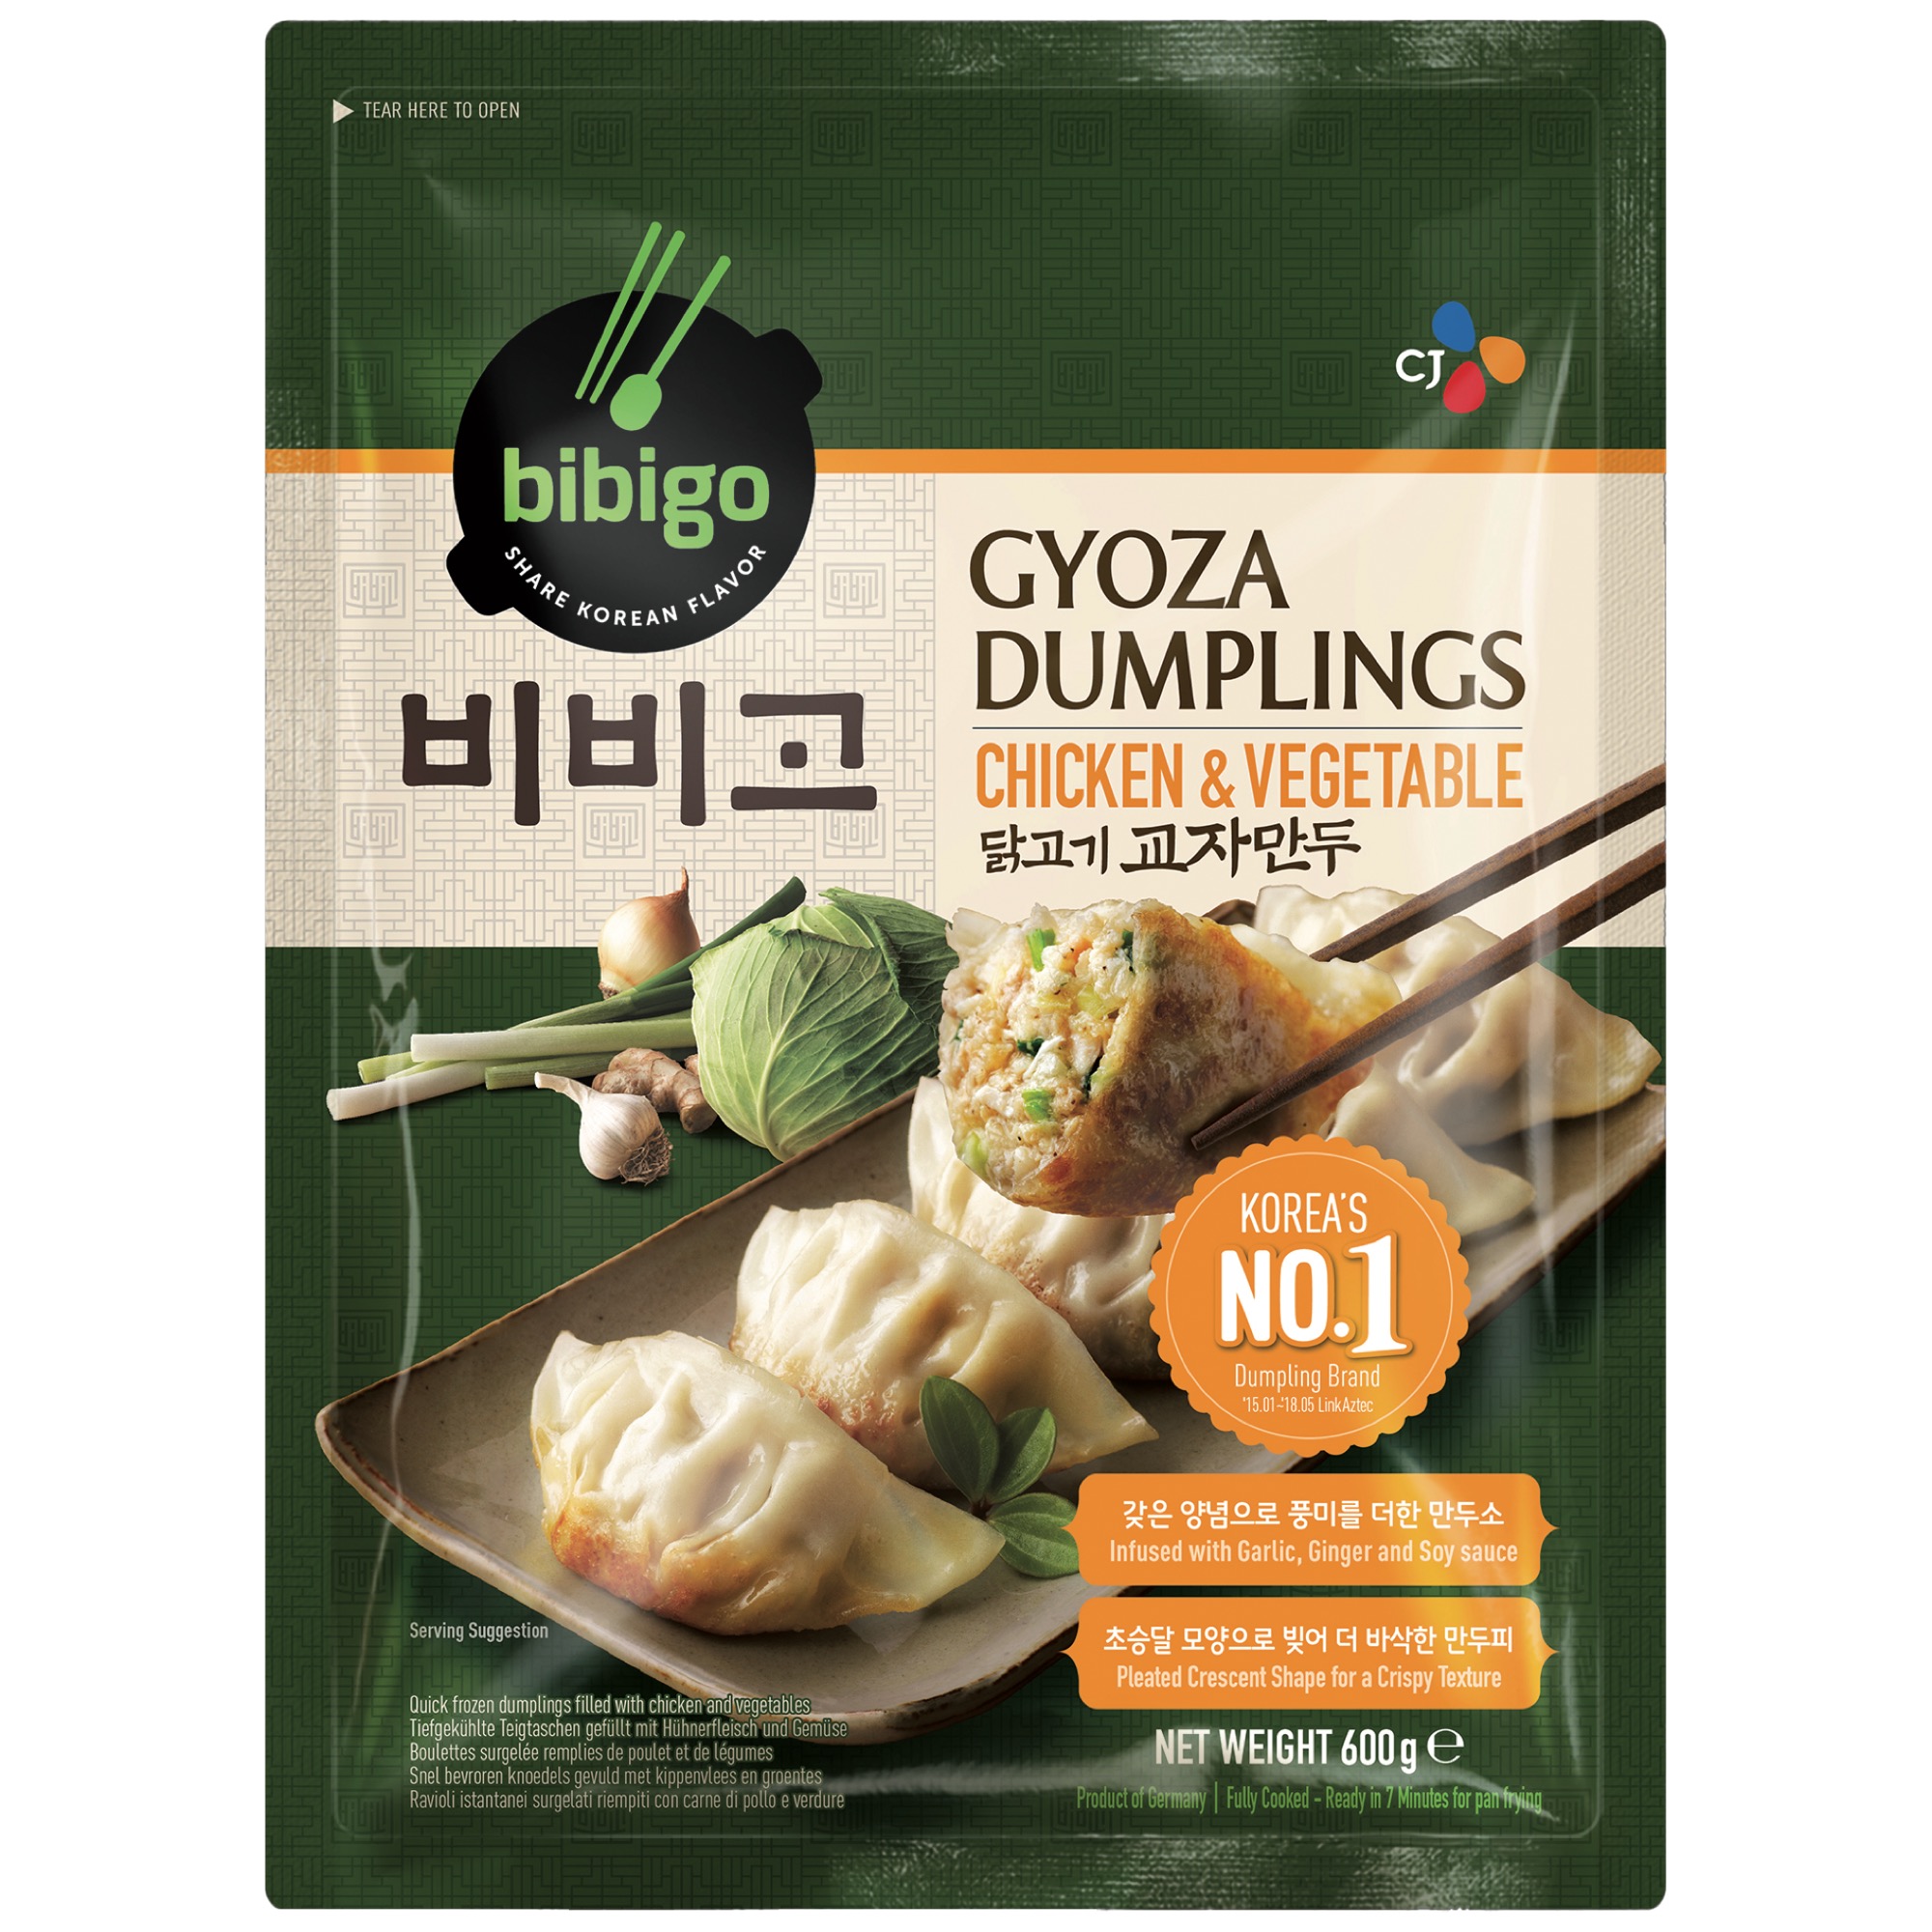 Gyoza Dumplings Chicken & Vegi mr.600g